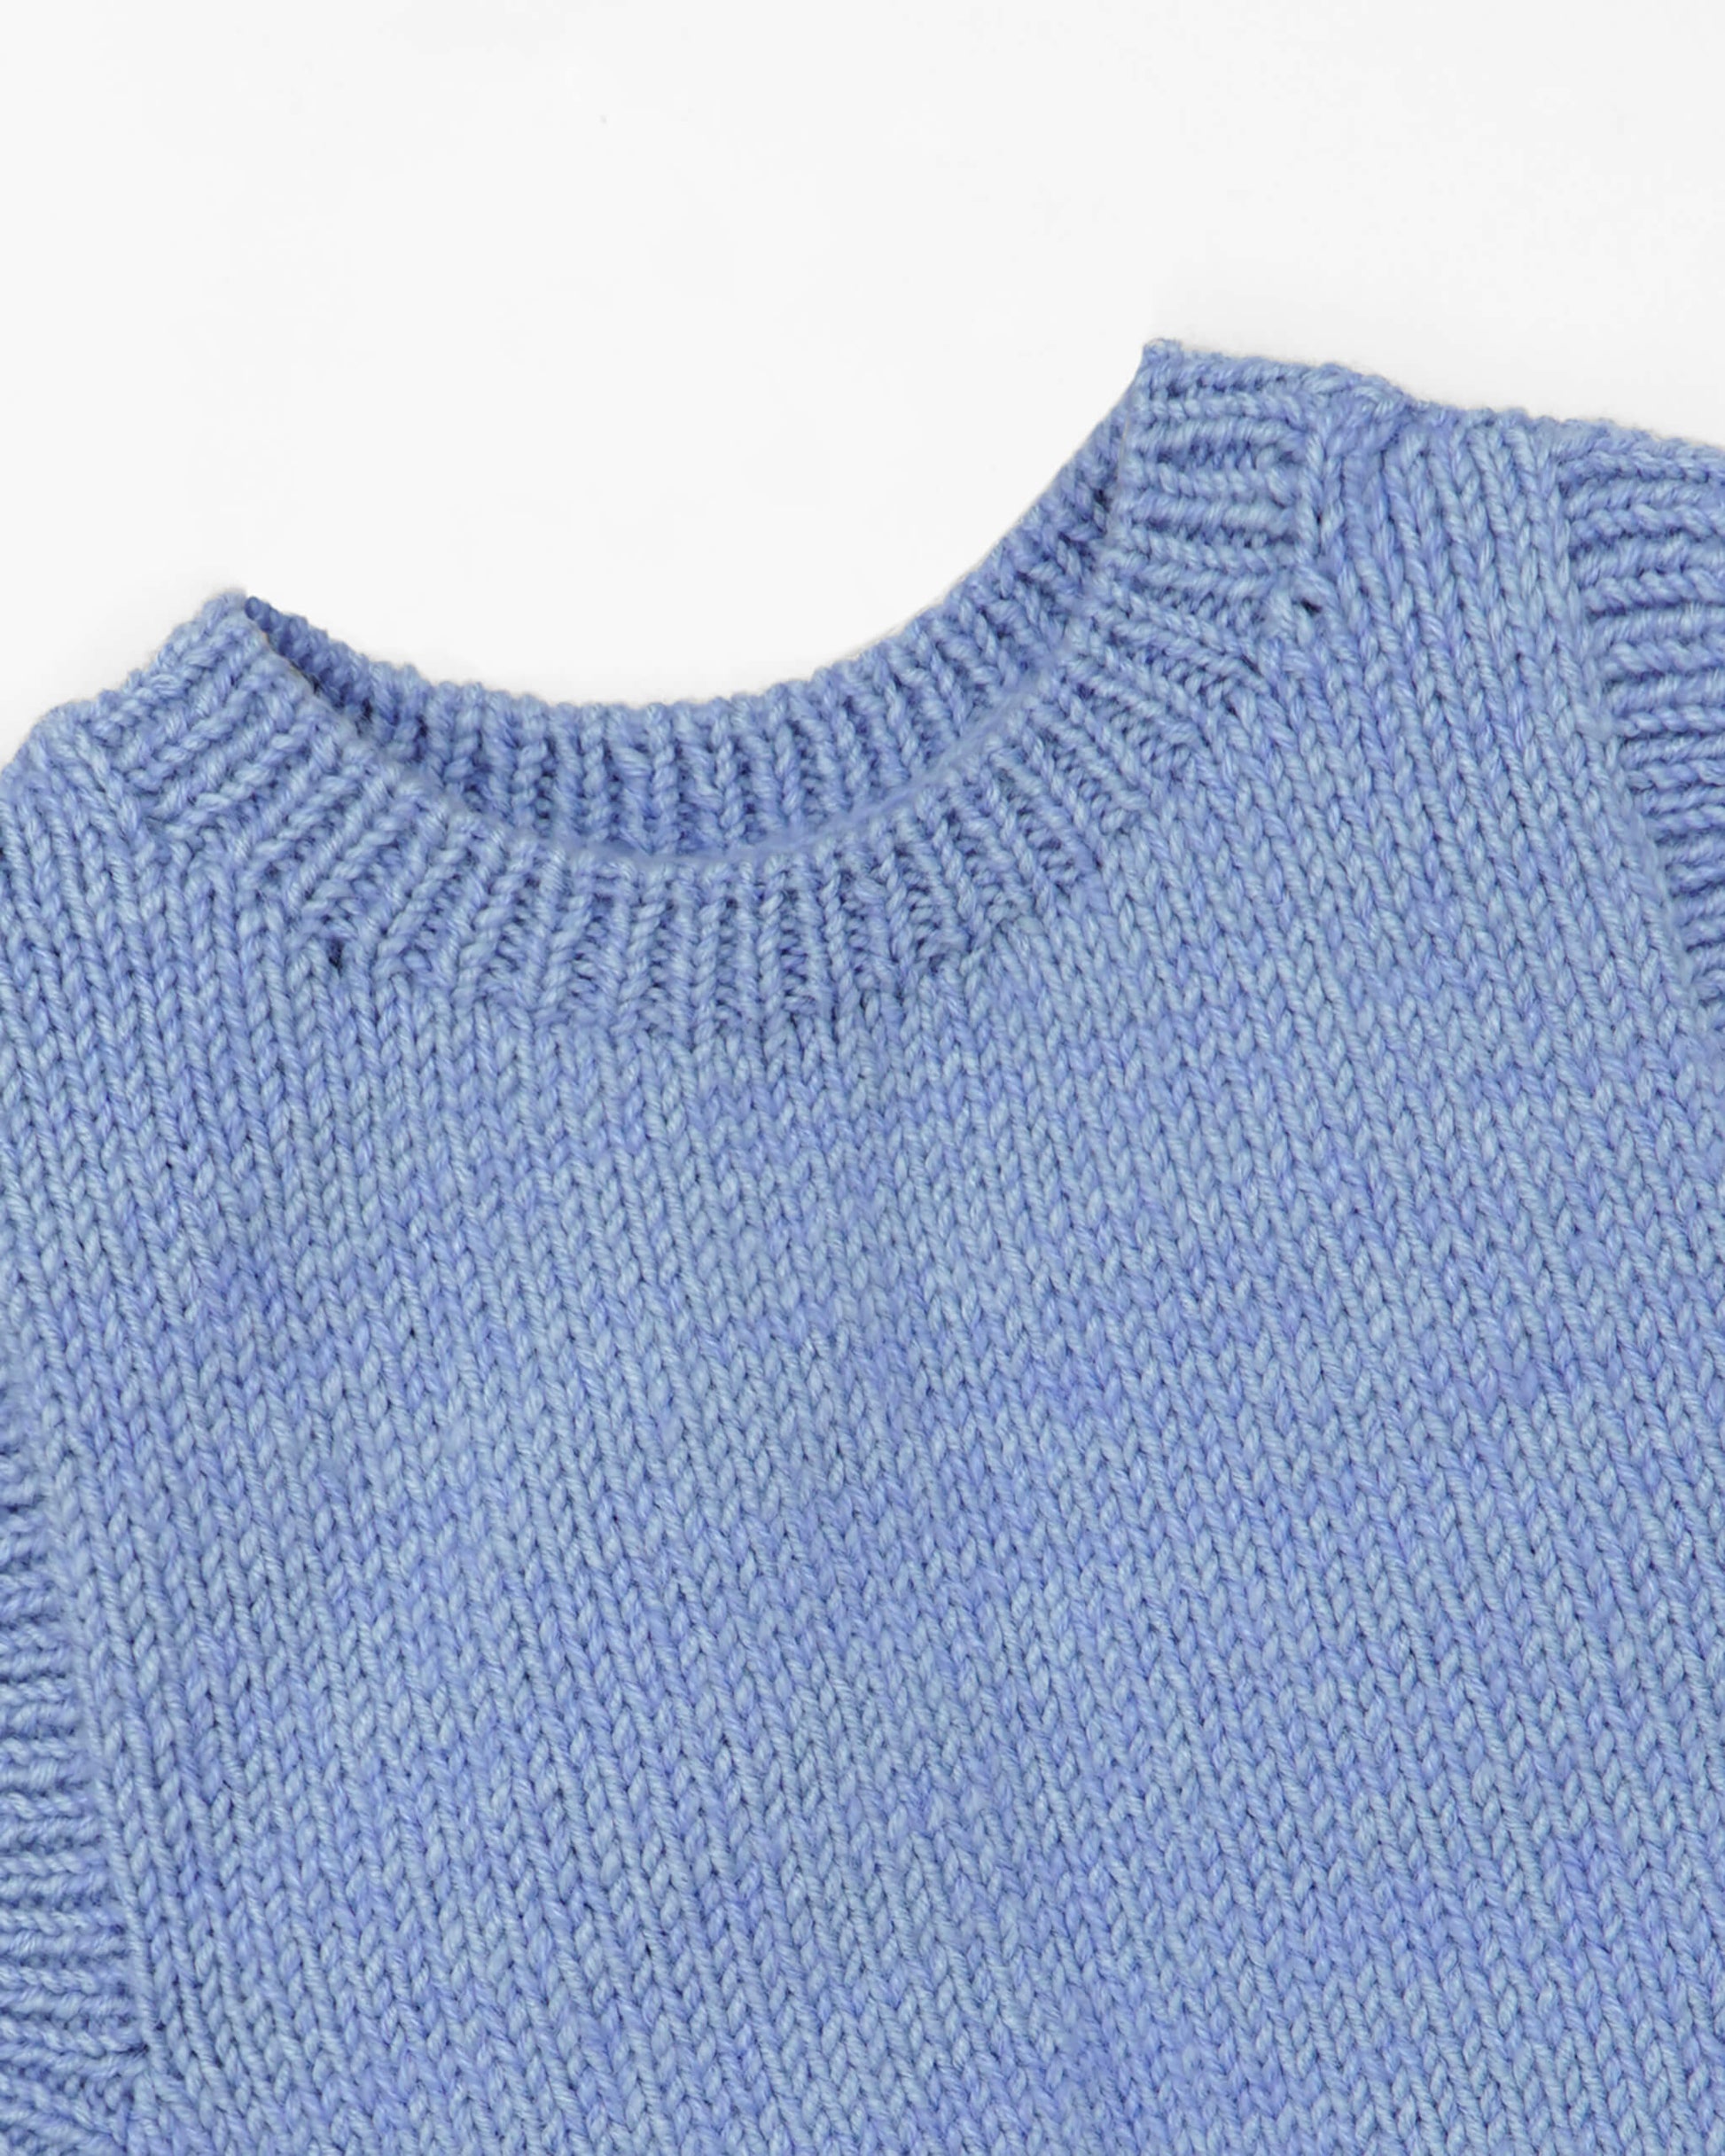 Ribbed vest knitting pattern